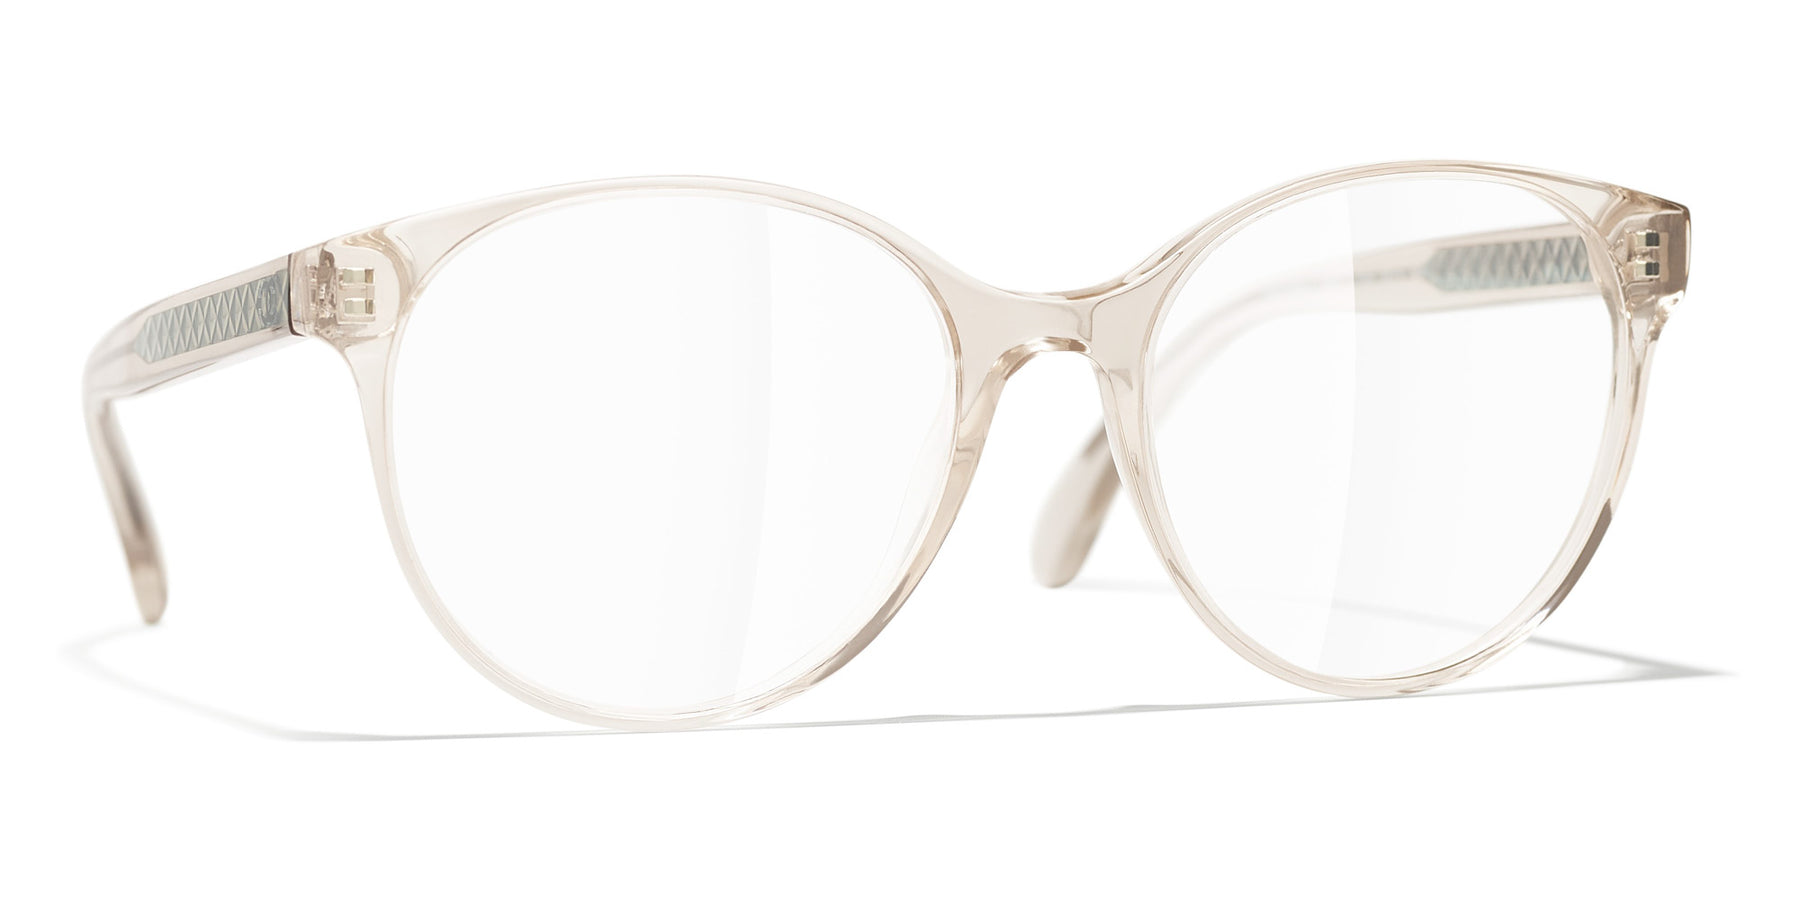 CHANEL 3401 c.1534 51mm Eyewear FRAMES Eyeglasses RX Optical Glasses - New  Italy - GGV Eyewear